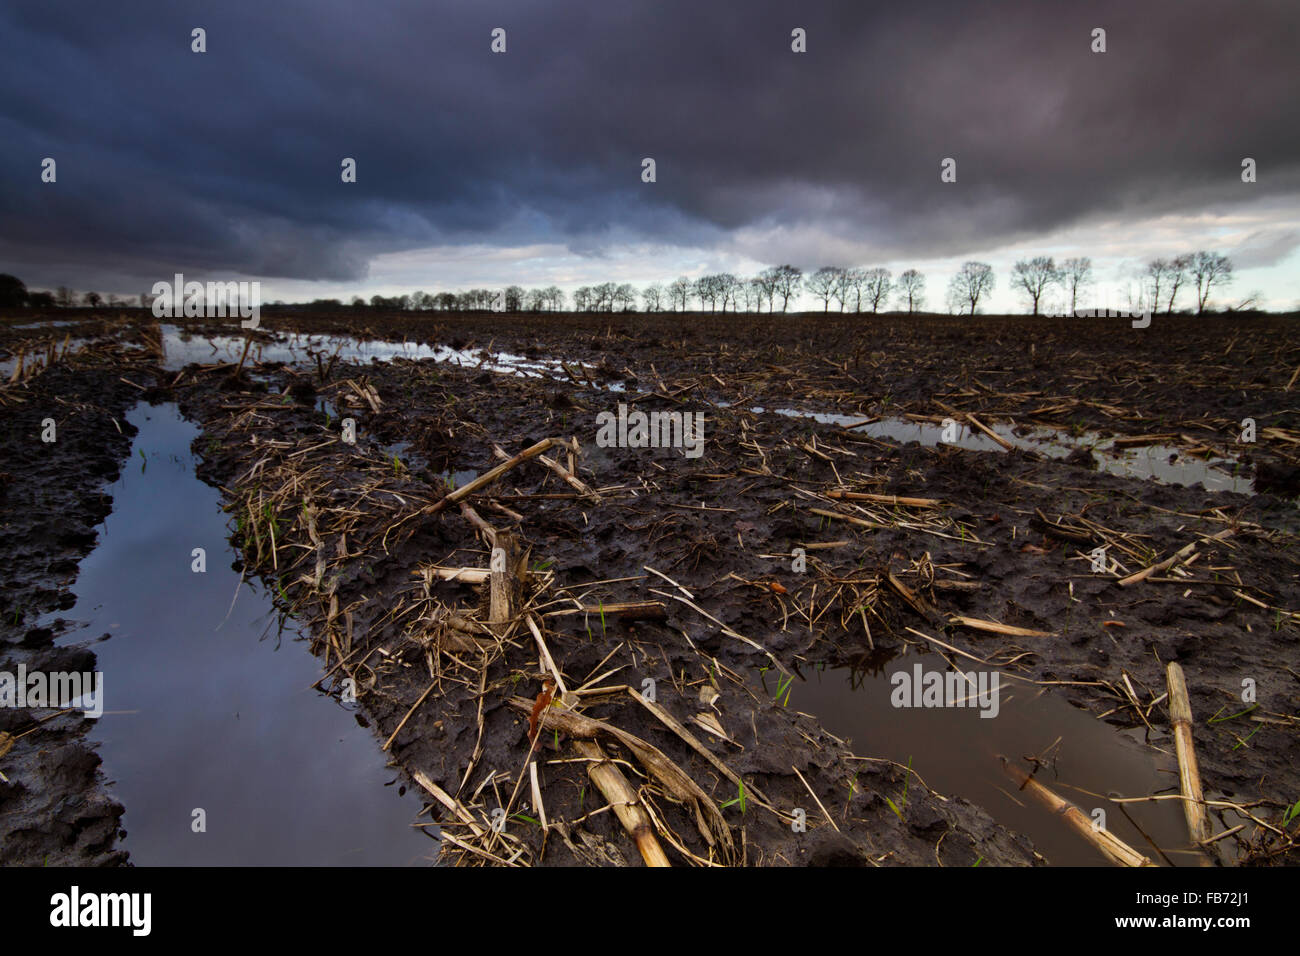 Muddy maize field under a dark sky Stock Photo